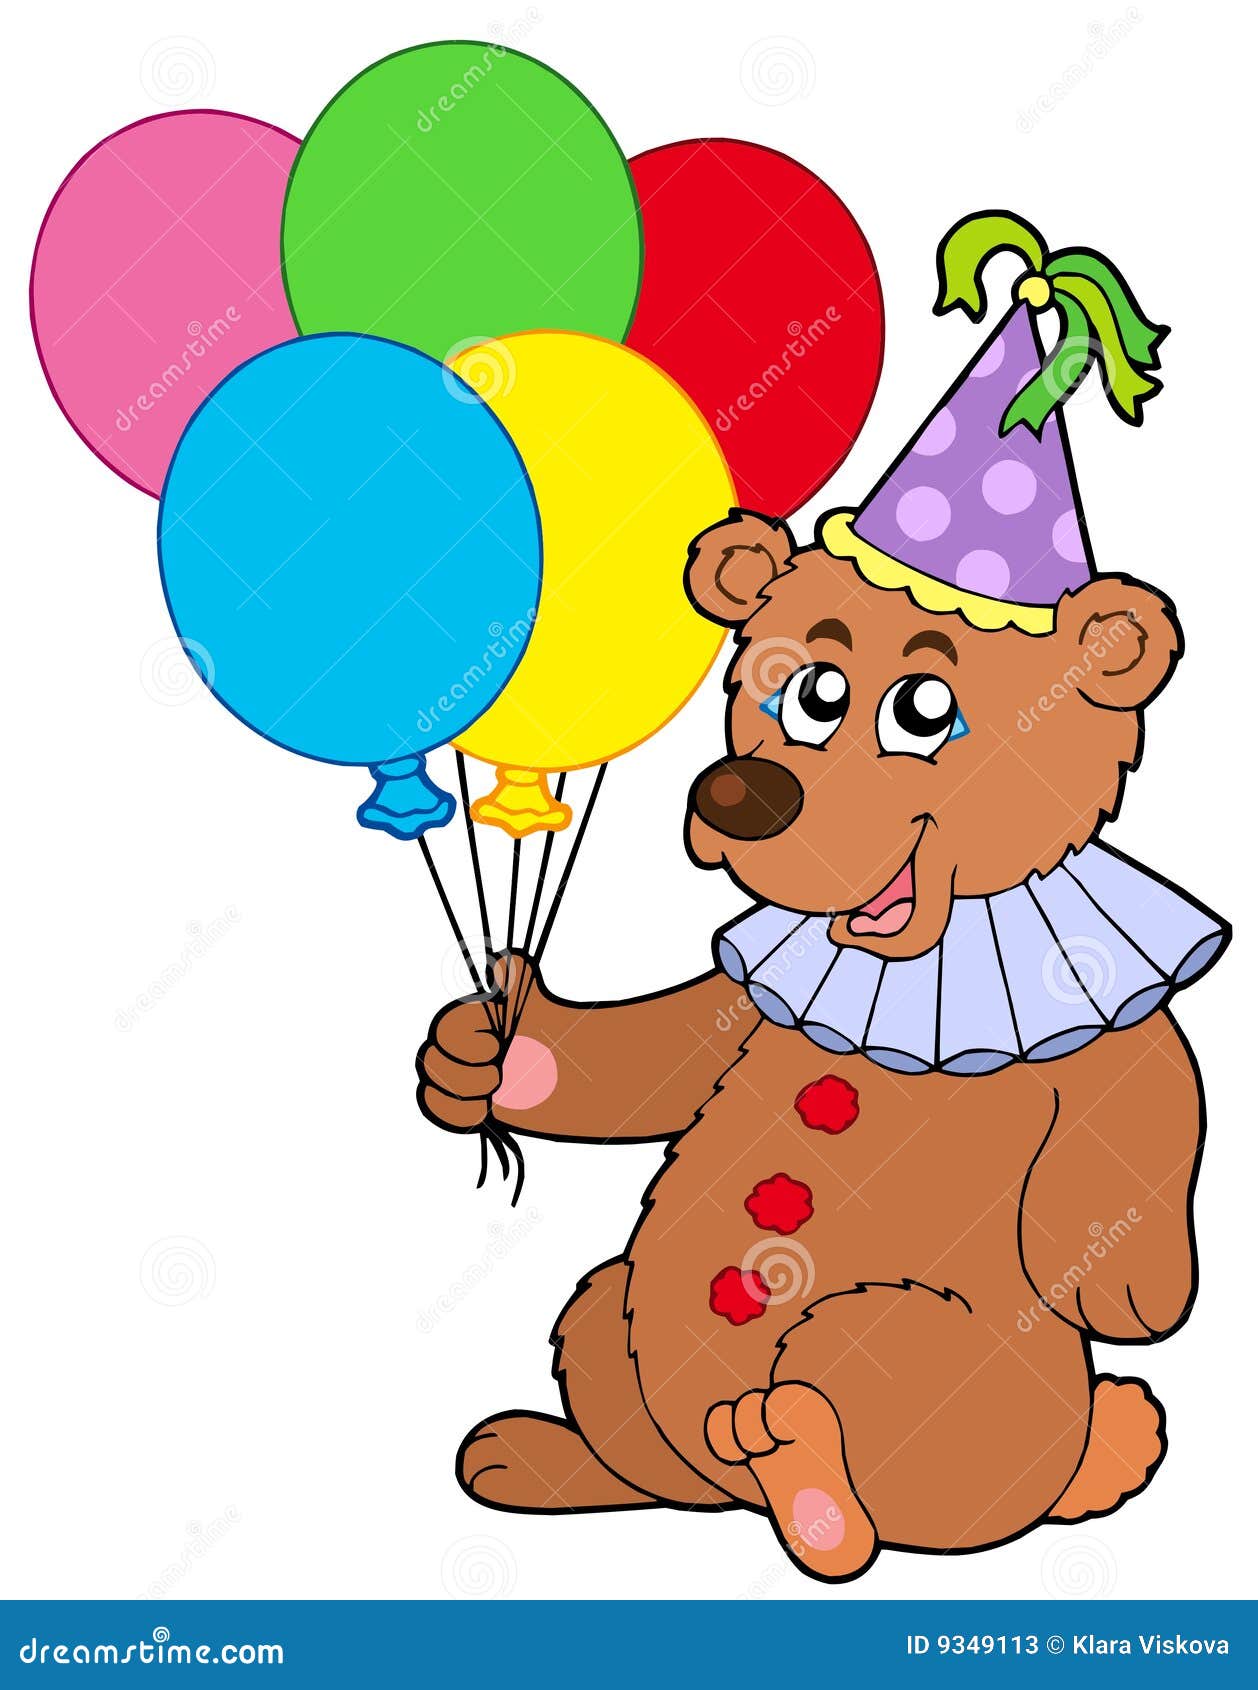 teddy bear with balloons clipart - photo #35